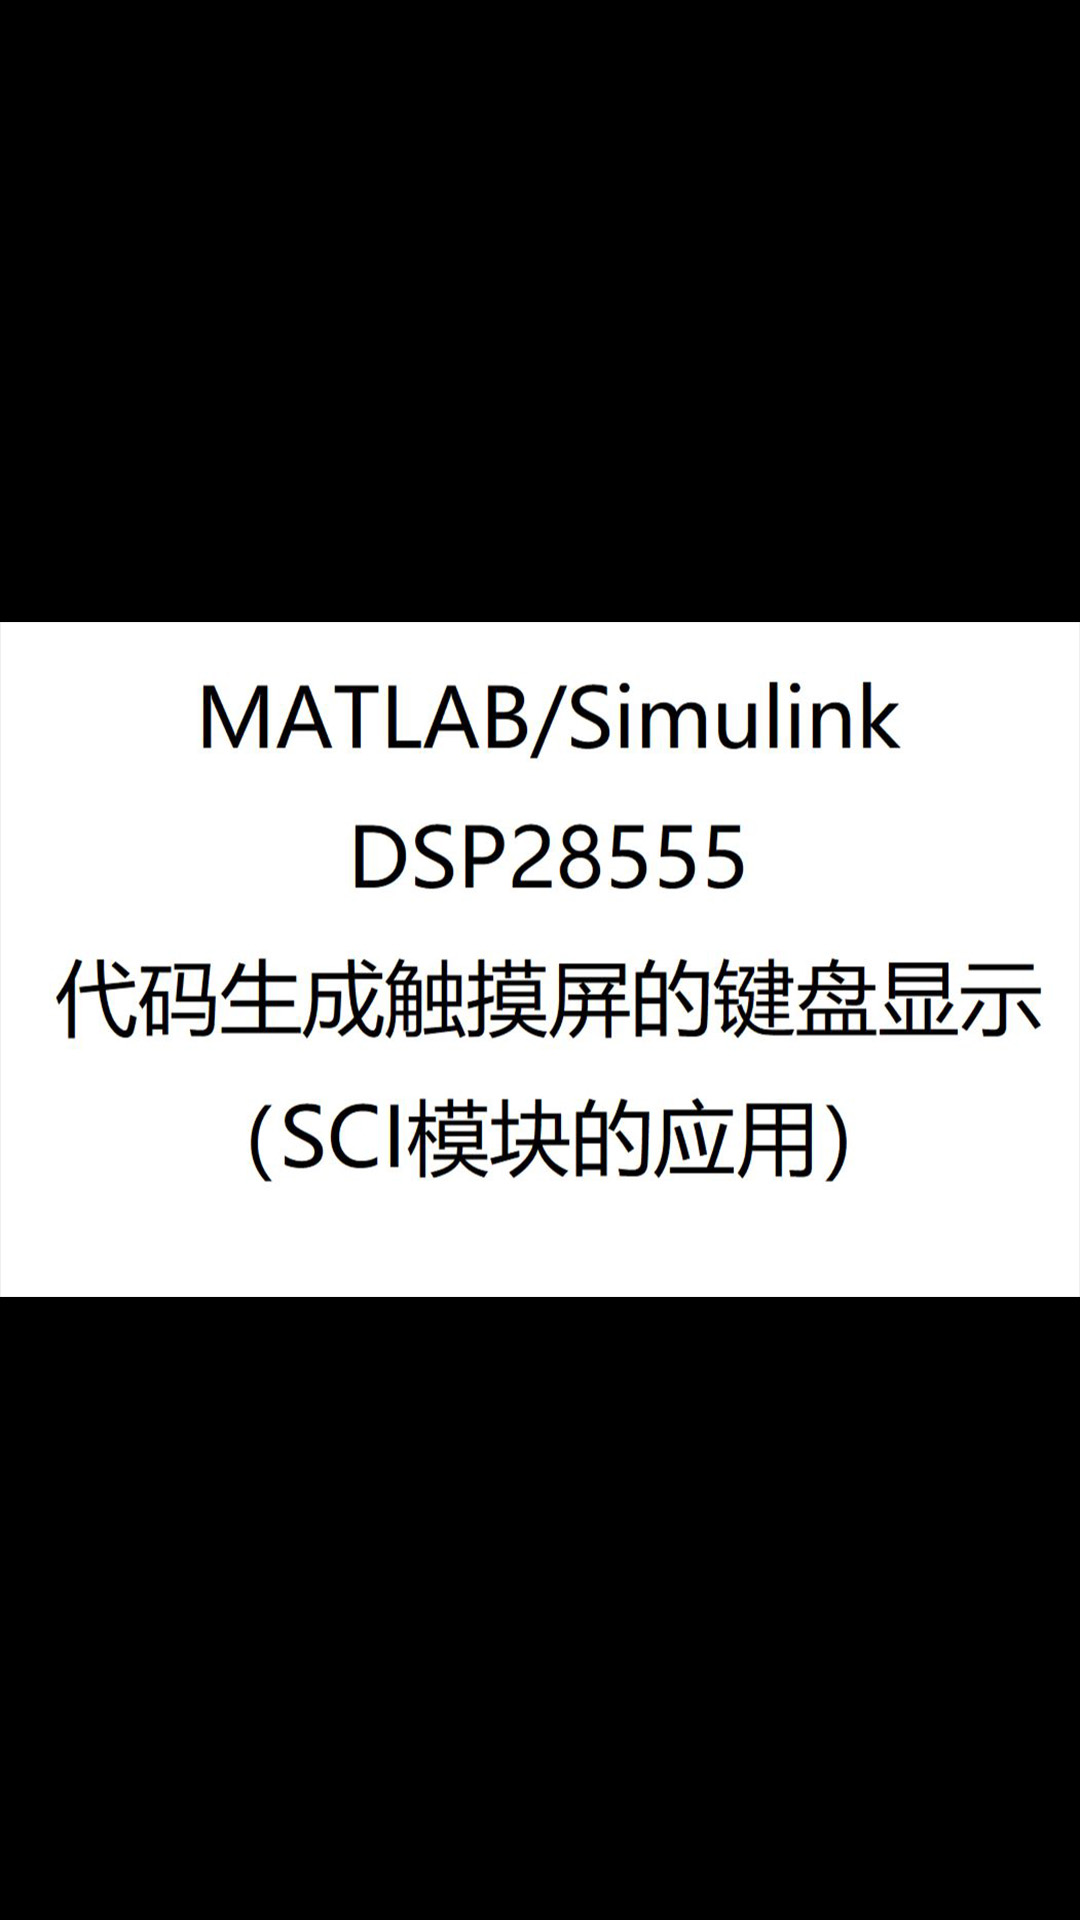 DSP28335代碼生成觸摸屏的鍵盤顯示程序